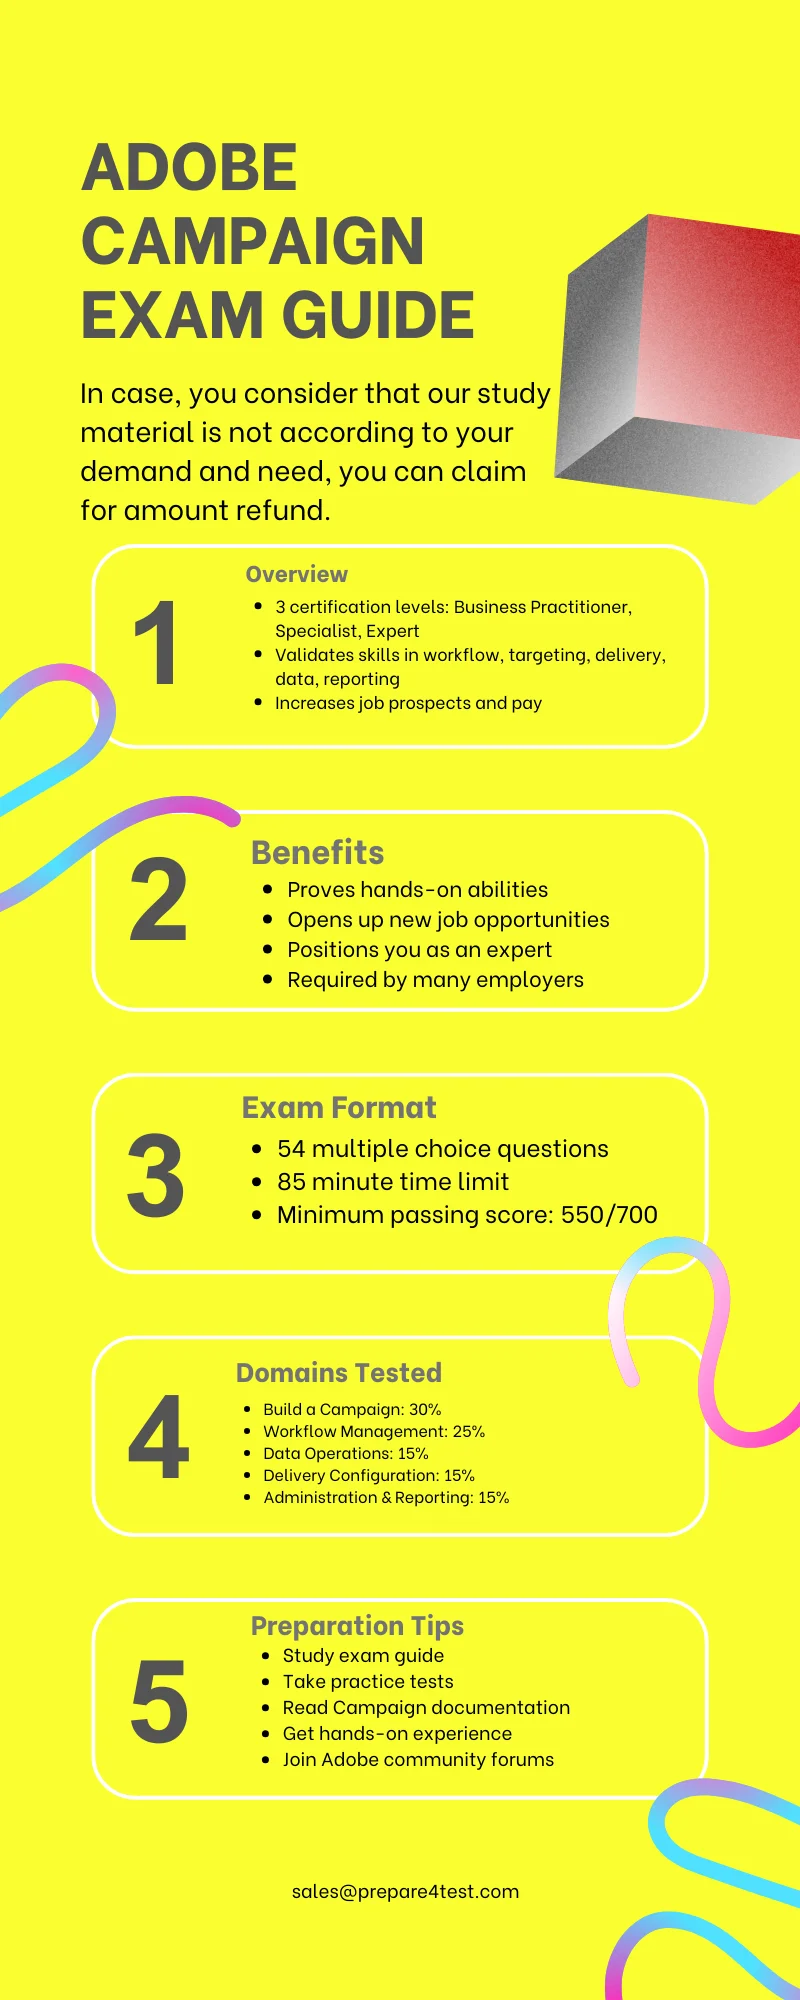 Adobe Campaign exam guide Infographic